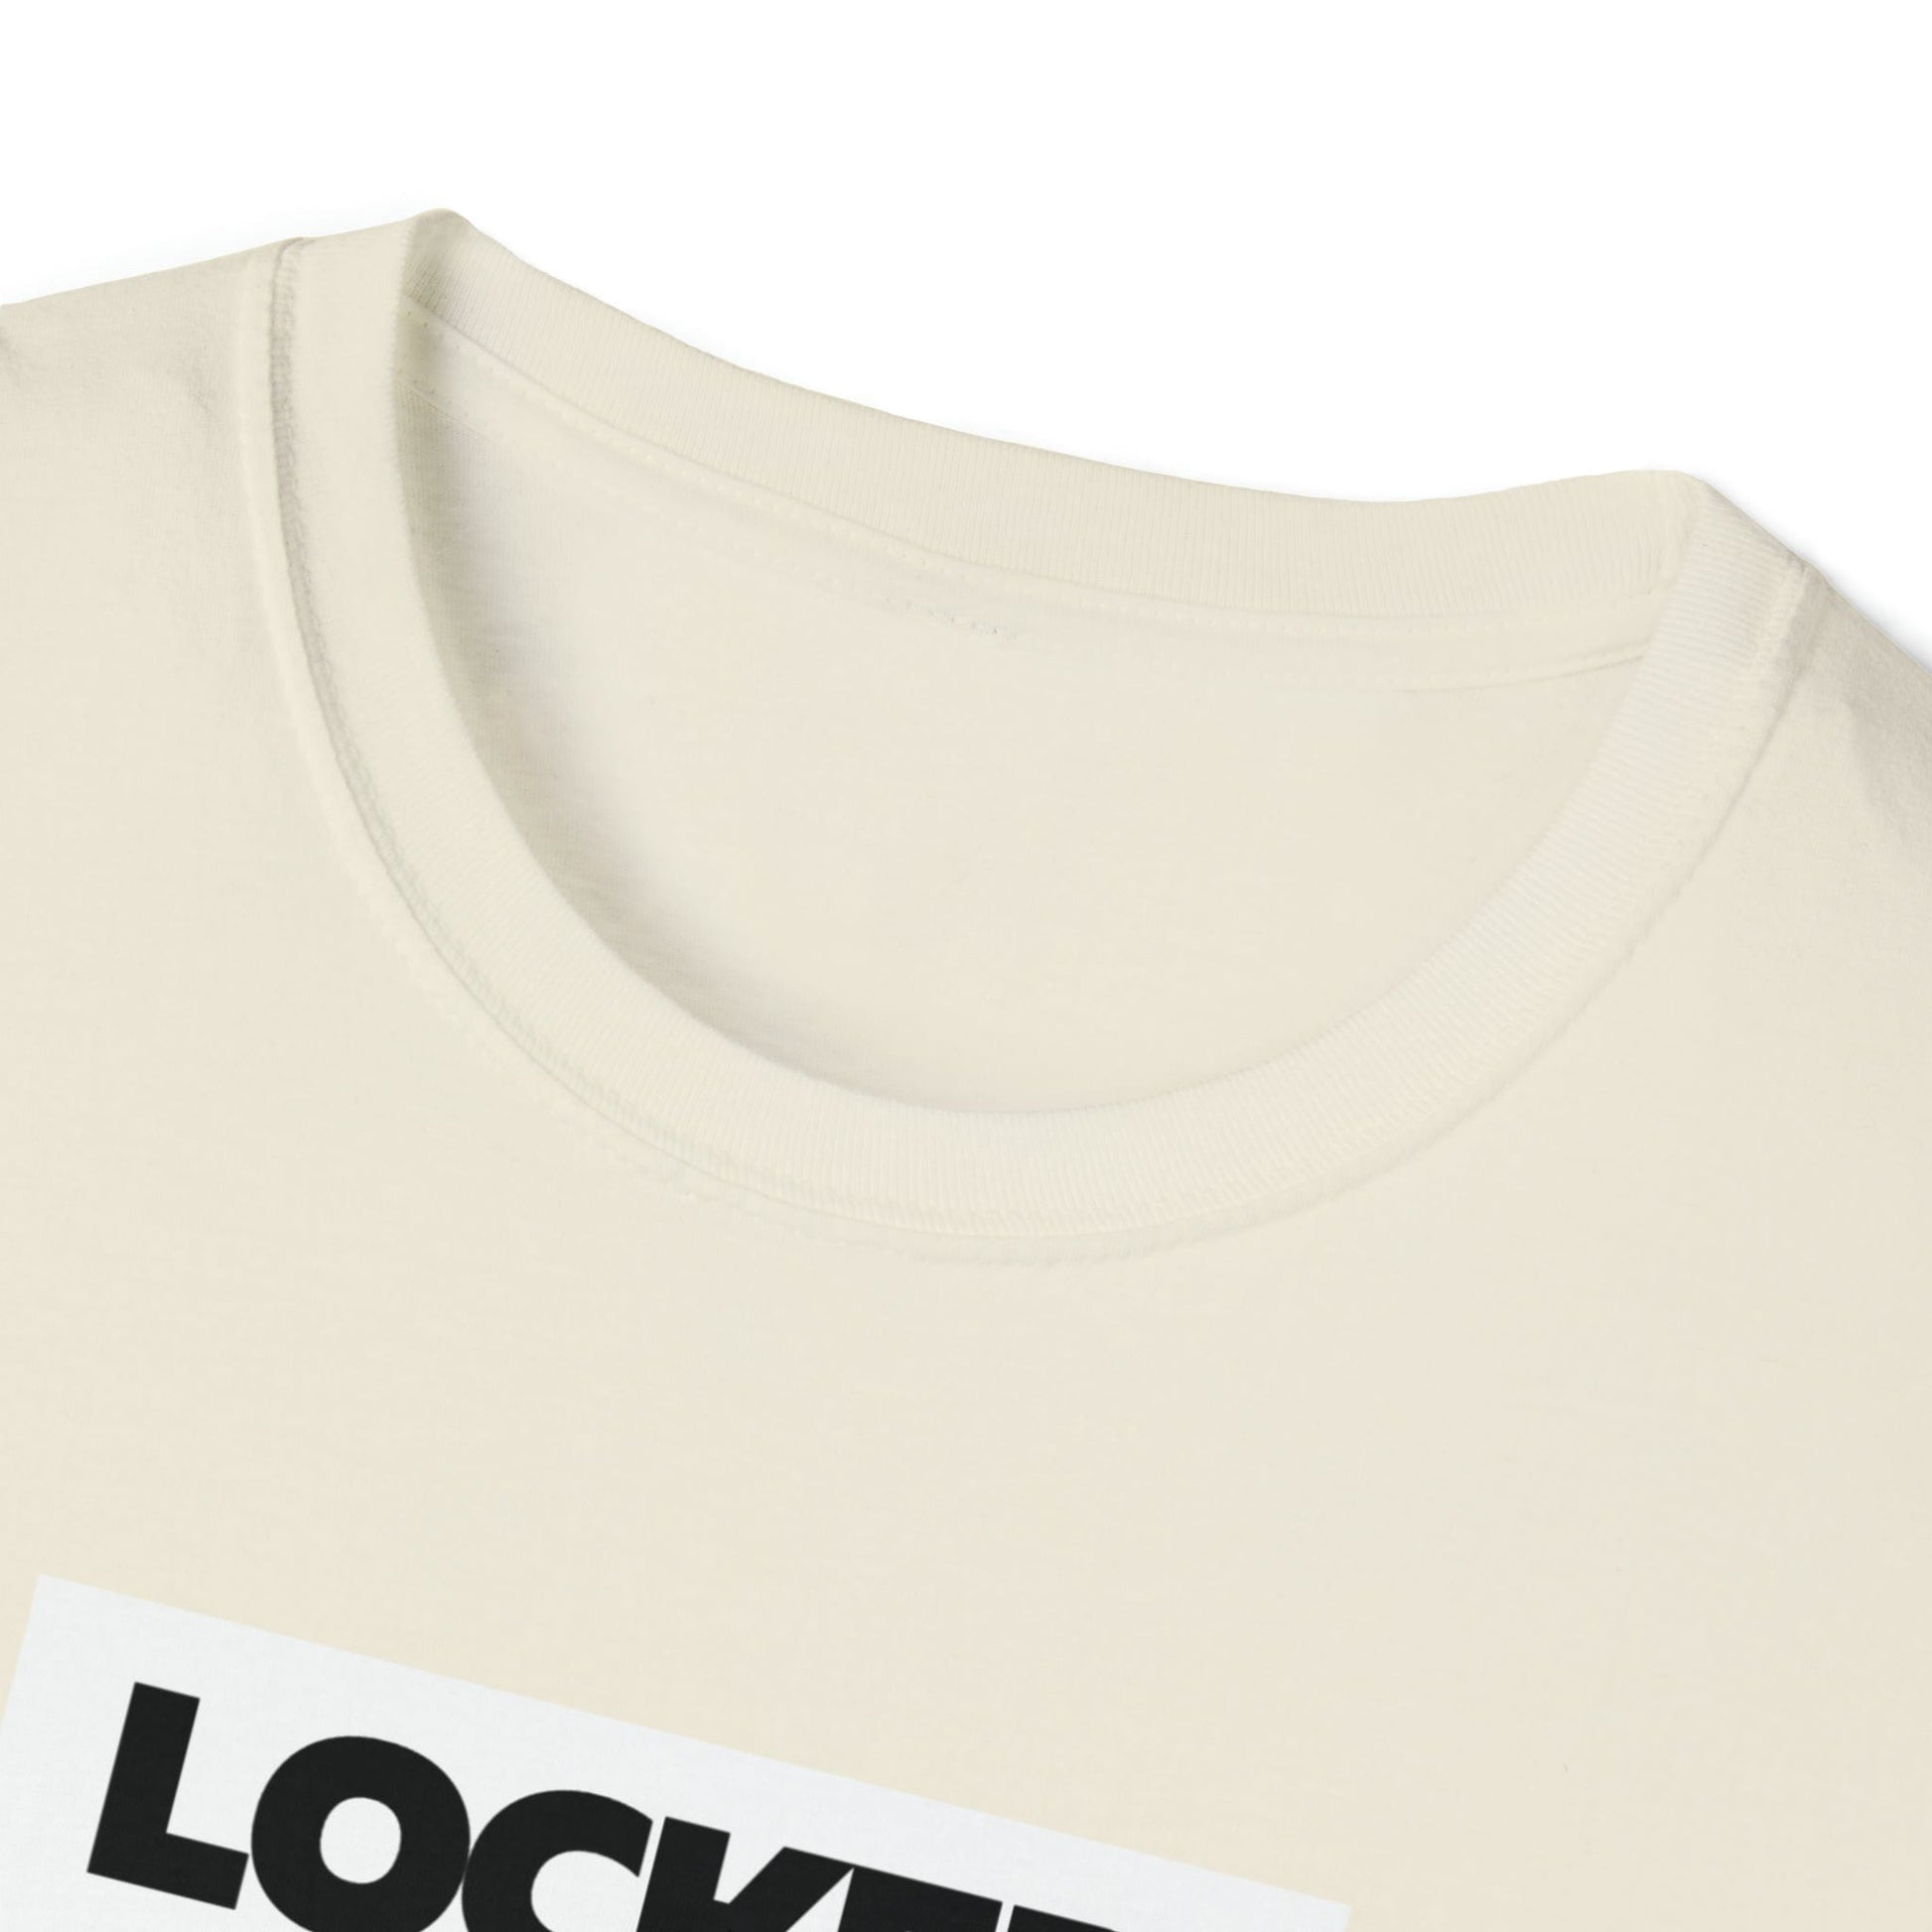 T-Shirt LockedBoy OG - Lockedboy Athletics Chastity Tshirt LEATHERDADDY BATOR